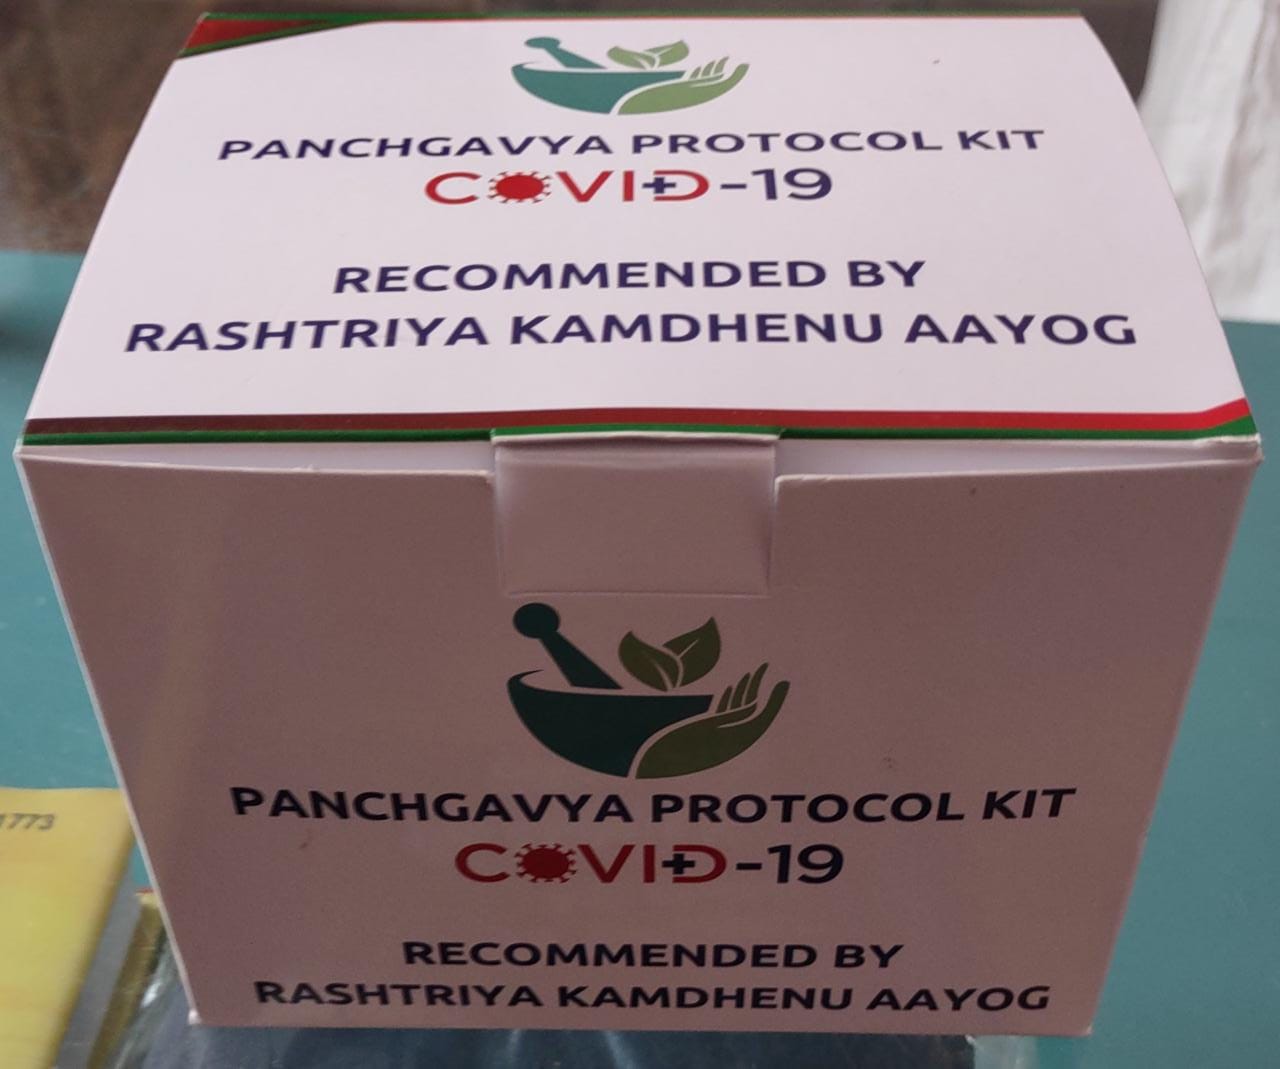 panchgavya protocol kit covid-19